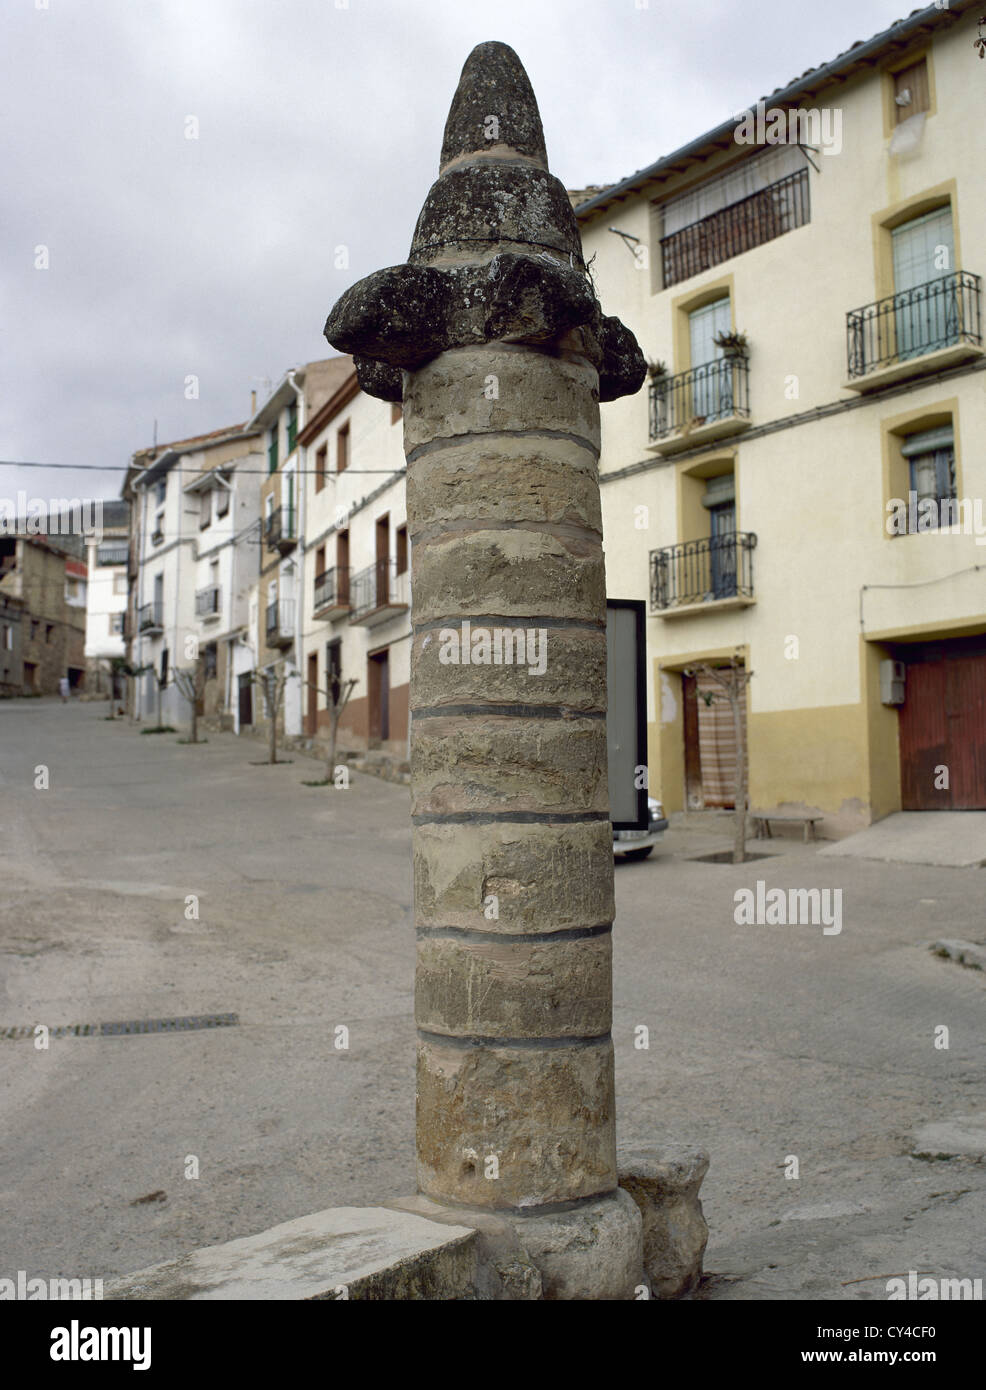 Cepo de castigo público. Edad media. Muro de Aguas. La Rioja. España. Foto de stock